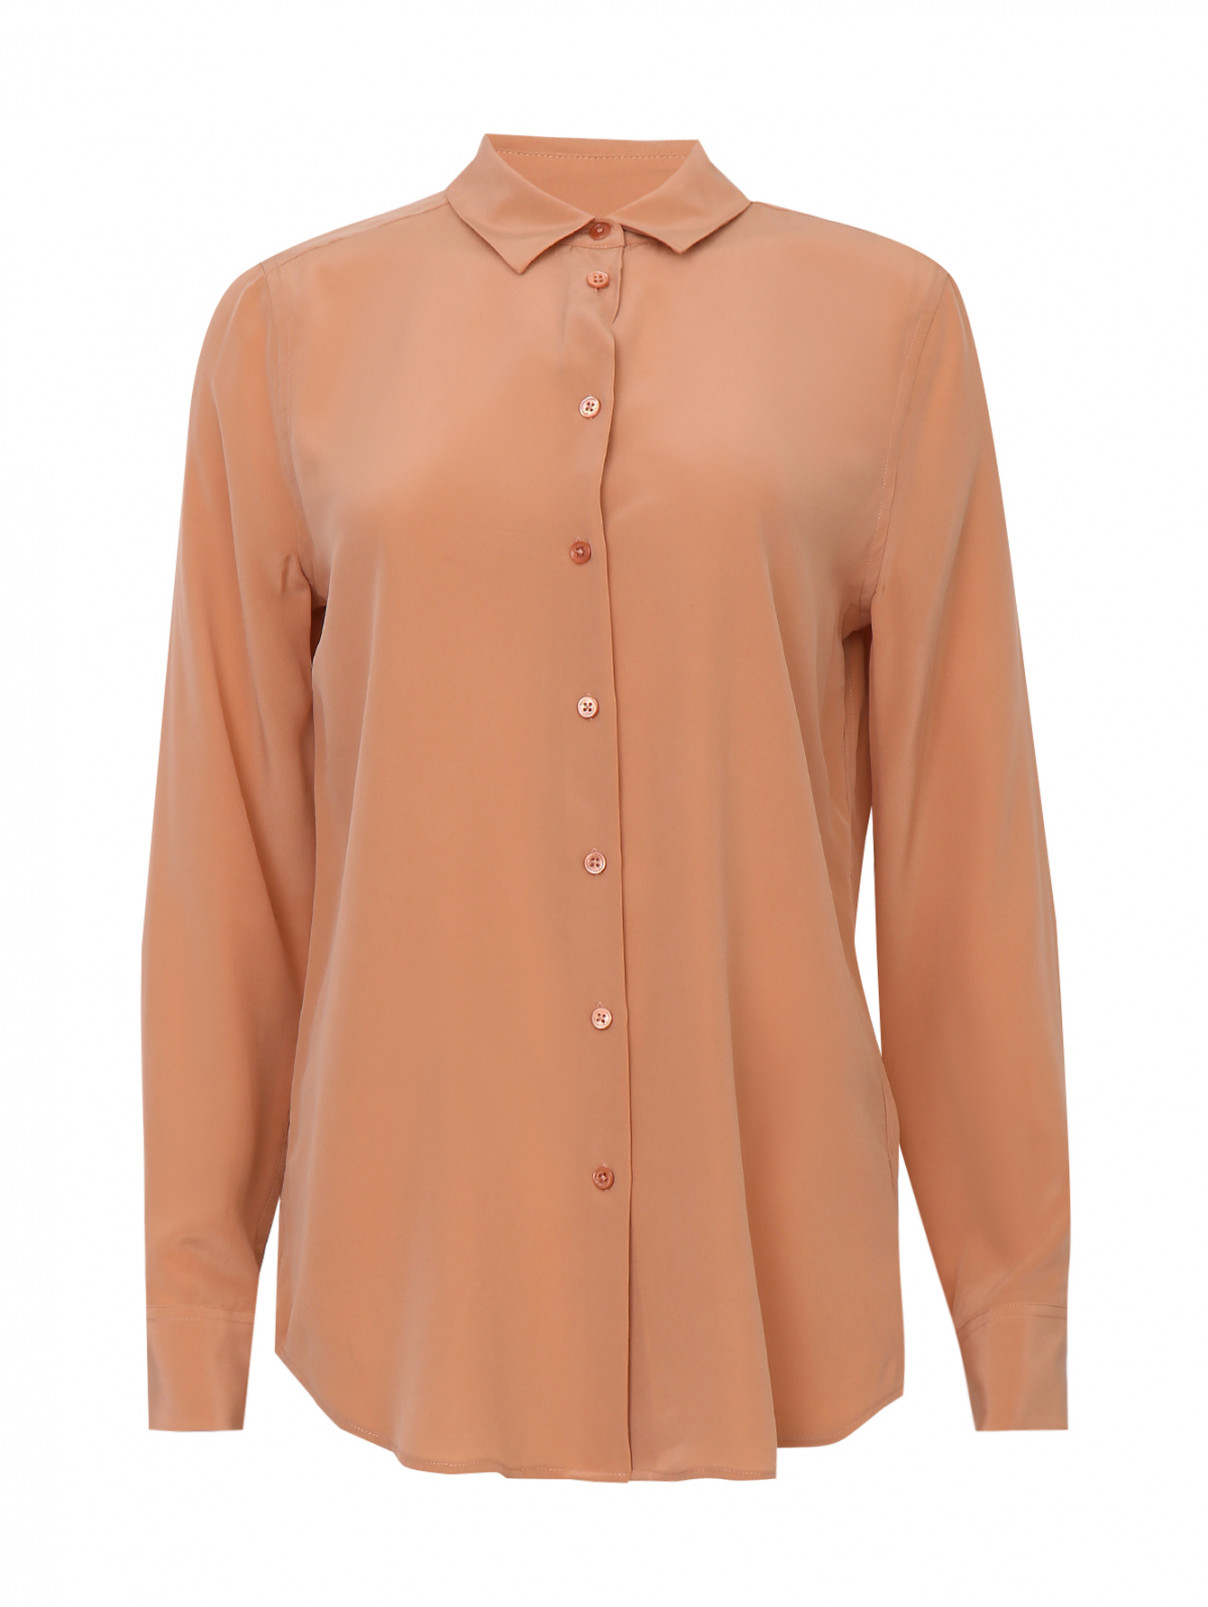 Блуза из шелка Equipment  –  Общий вид  – Цвет:  Бежевый